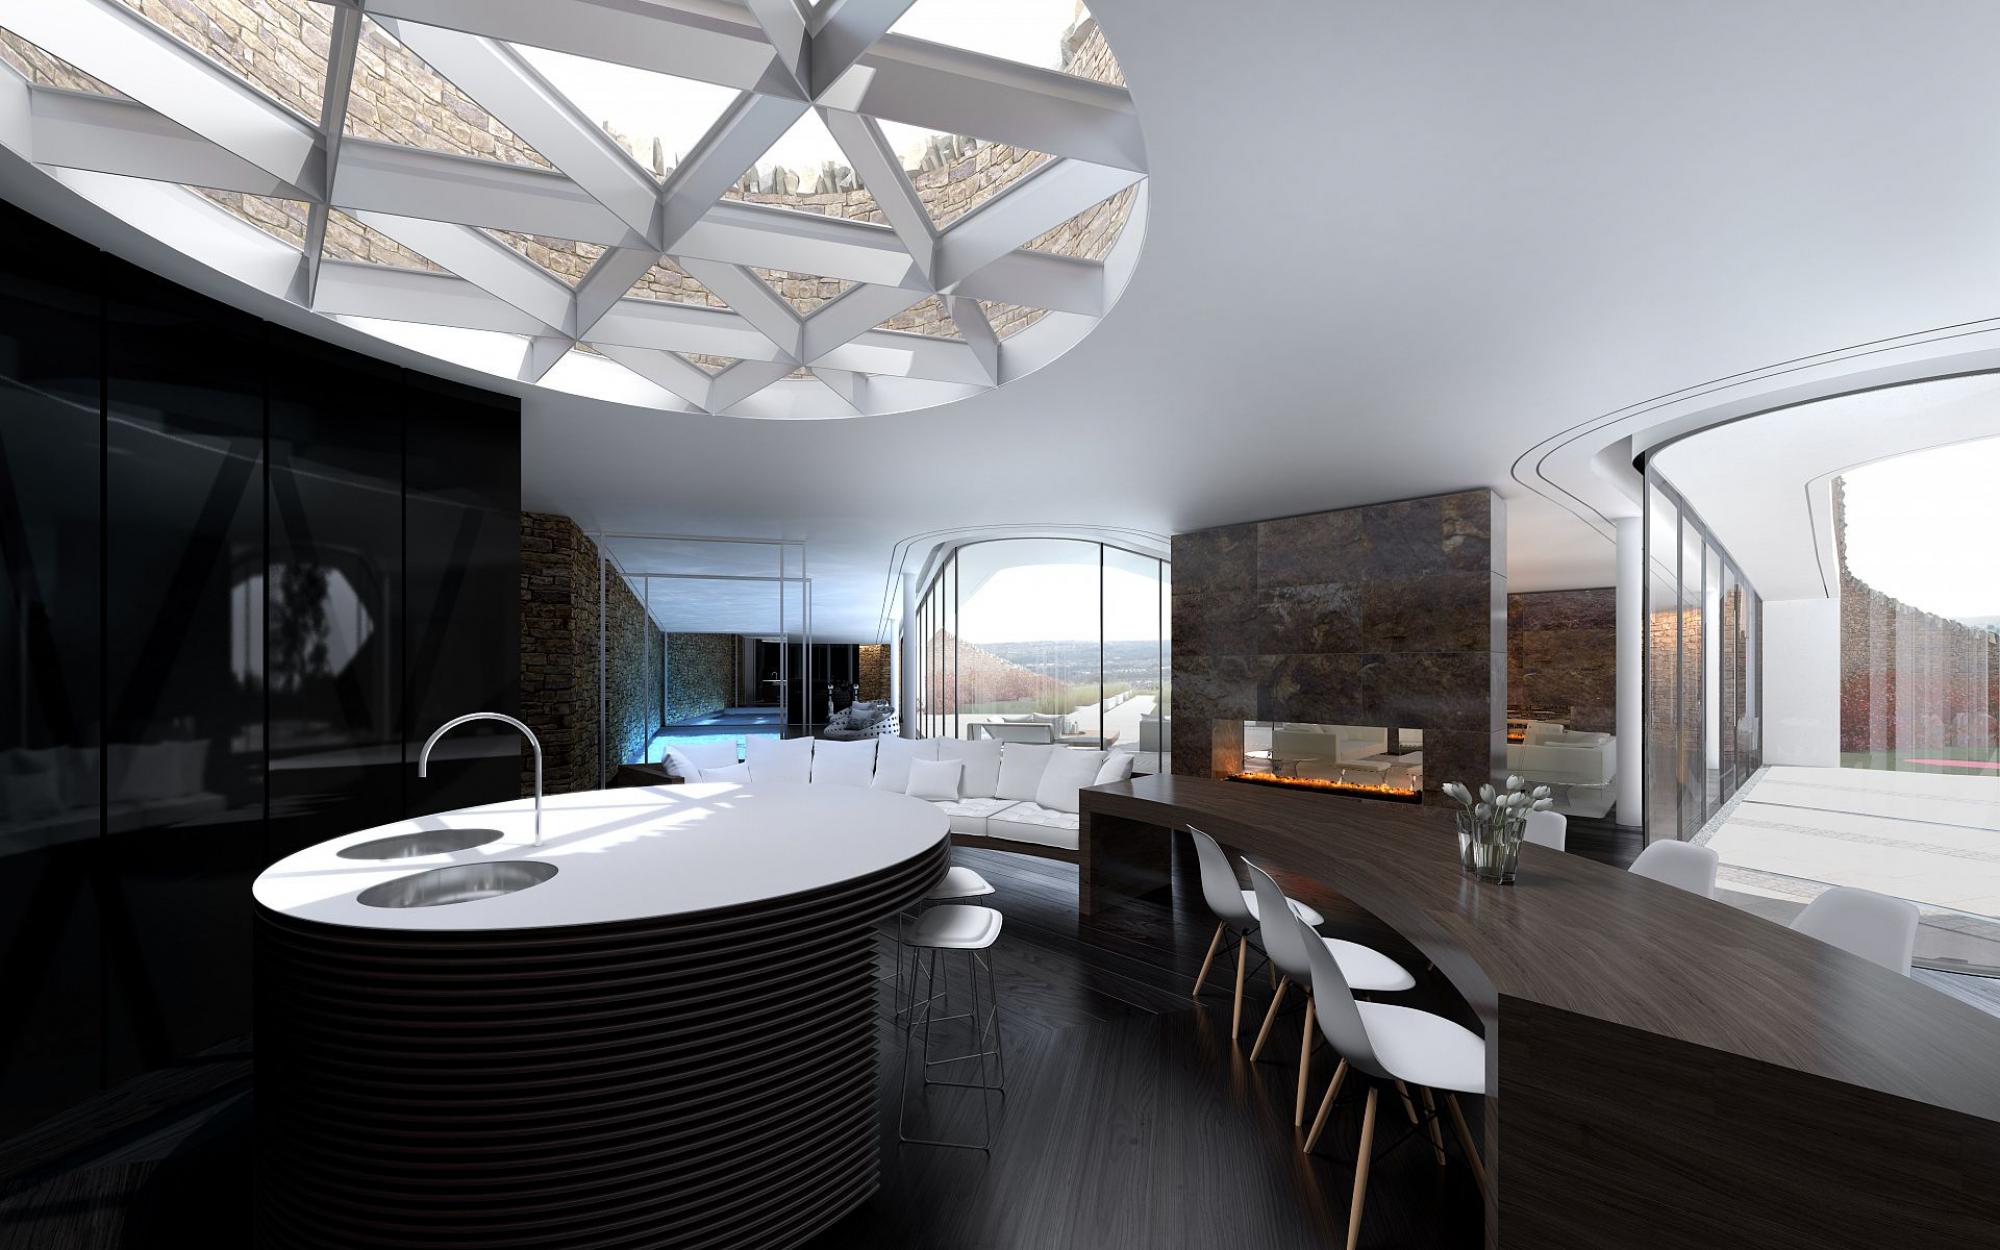 Gary Neville house interior. Kitchen with skylight roof